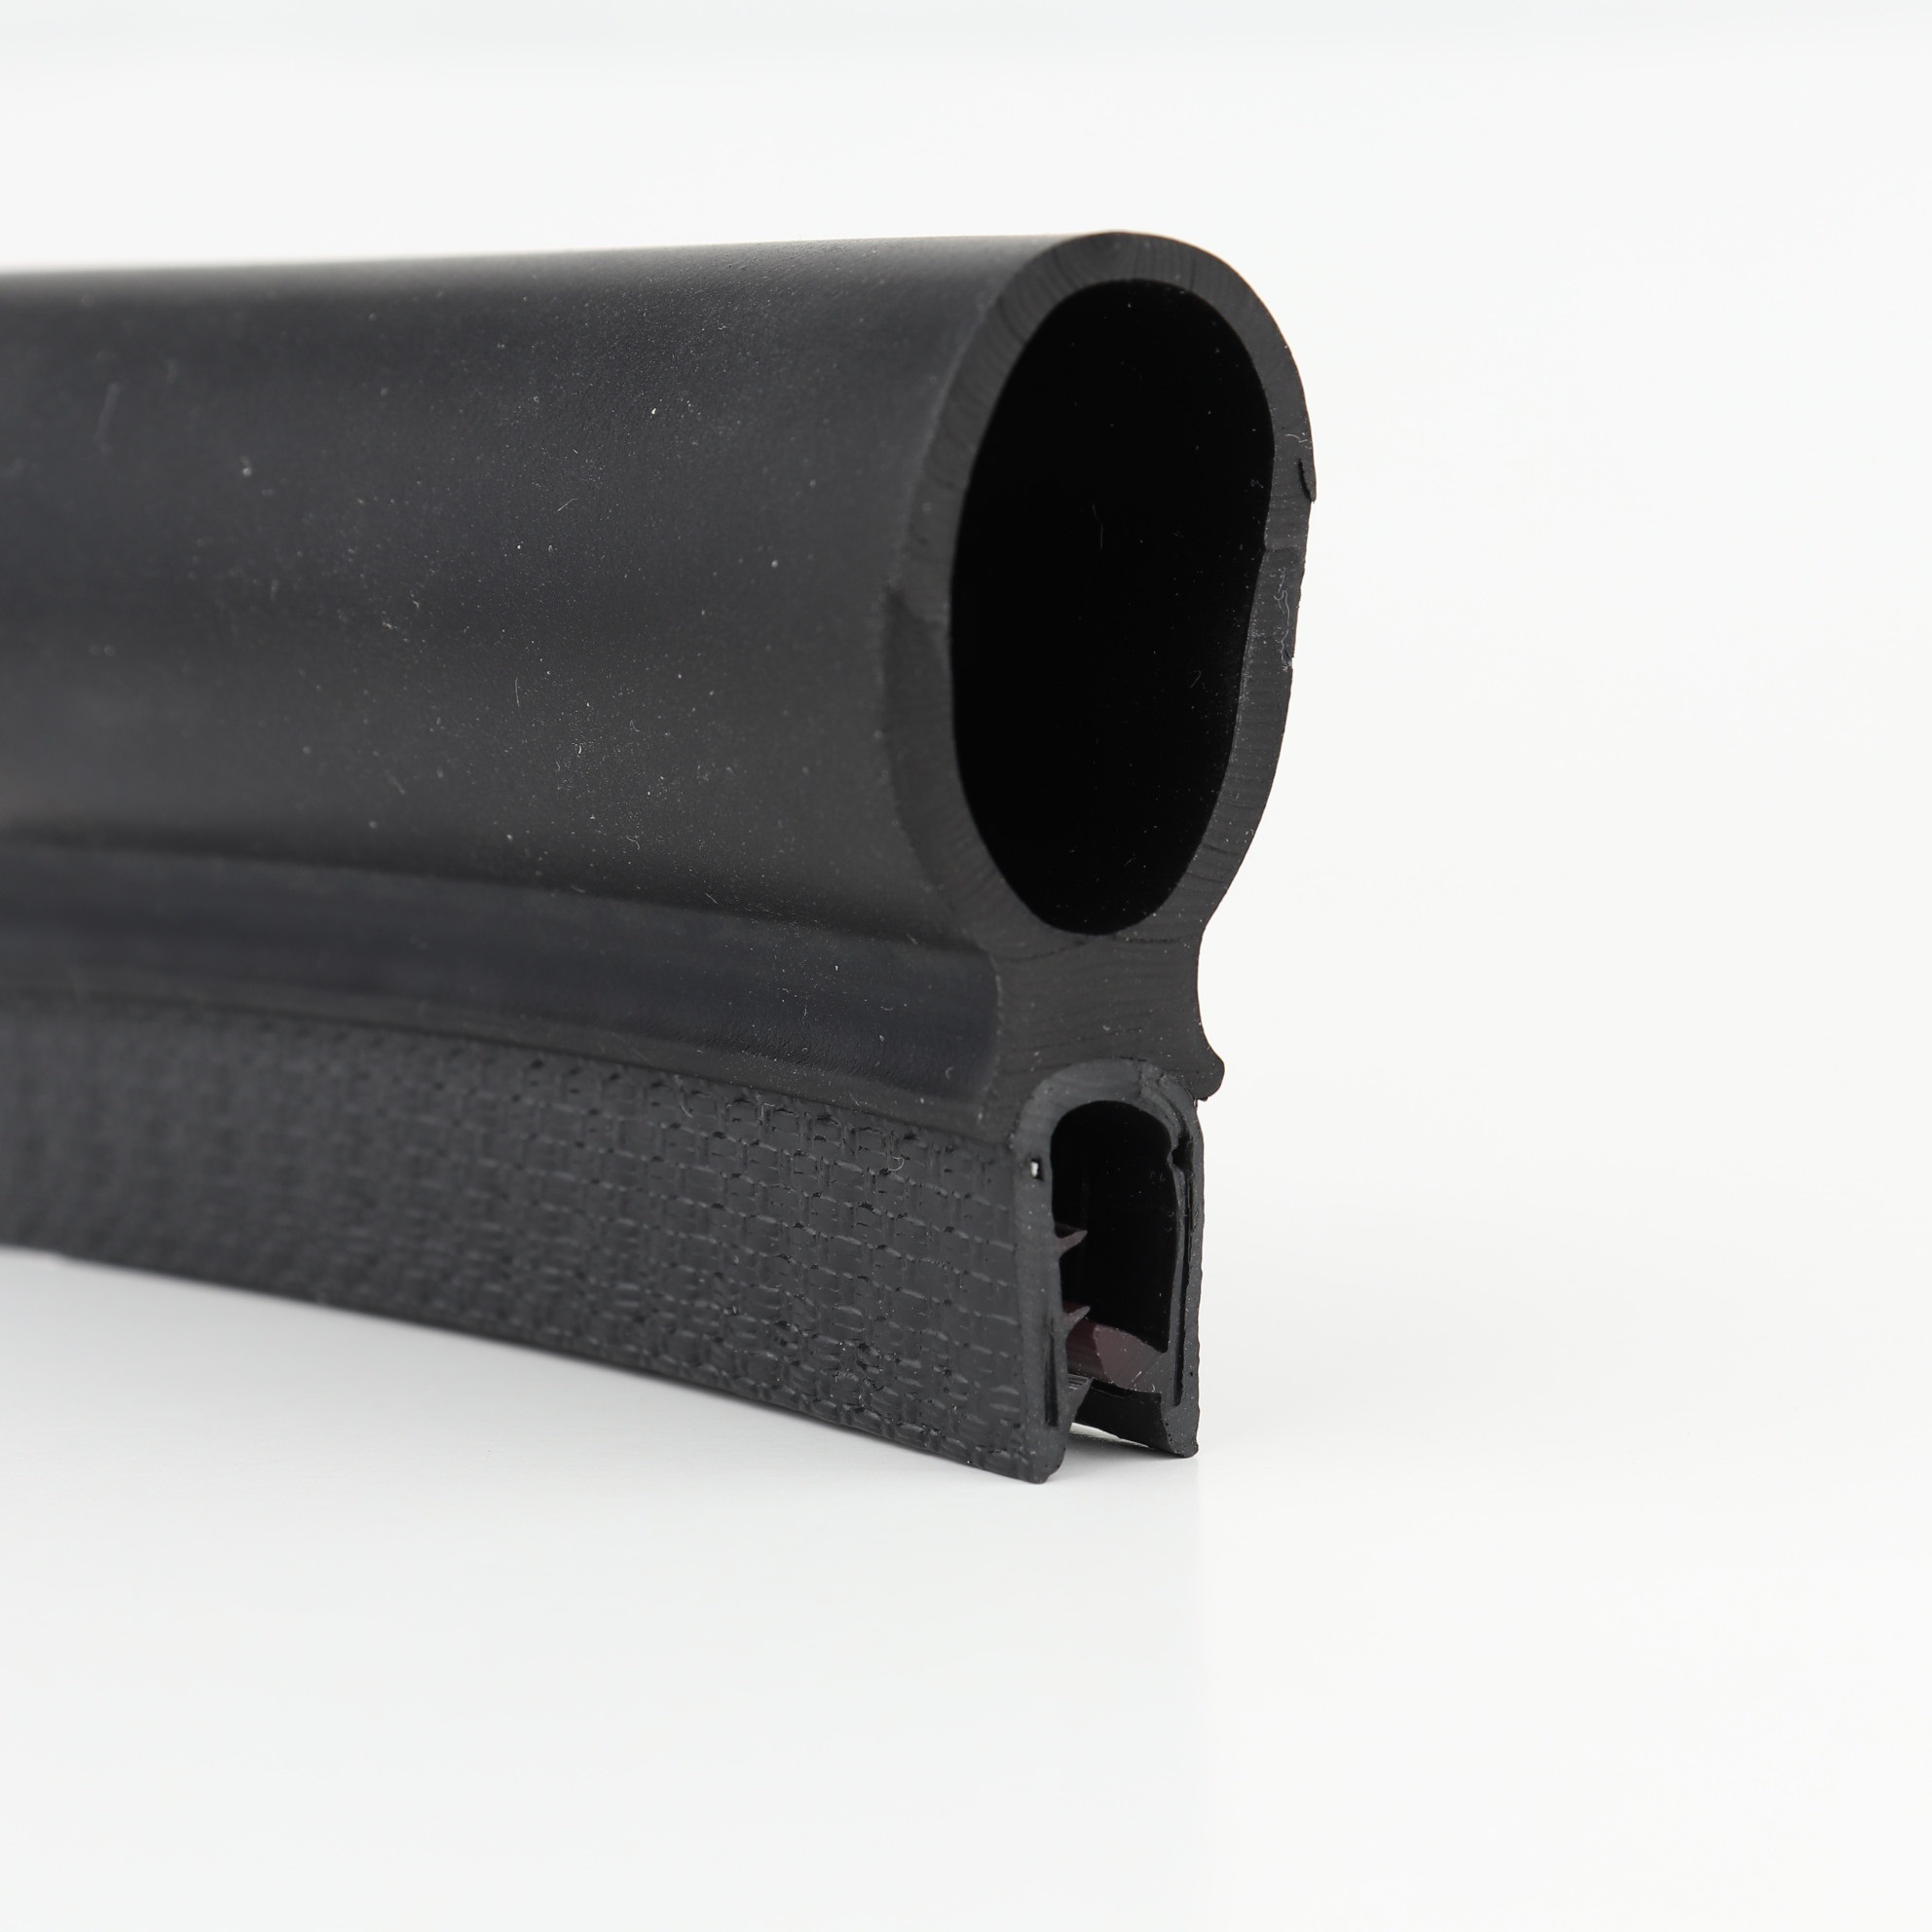 Kantenschutz-Dichtprofil - PVC/EPDM - mit Dichtung oben - Klemmbereich 2-4mm